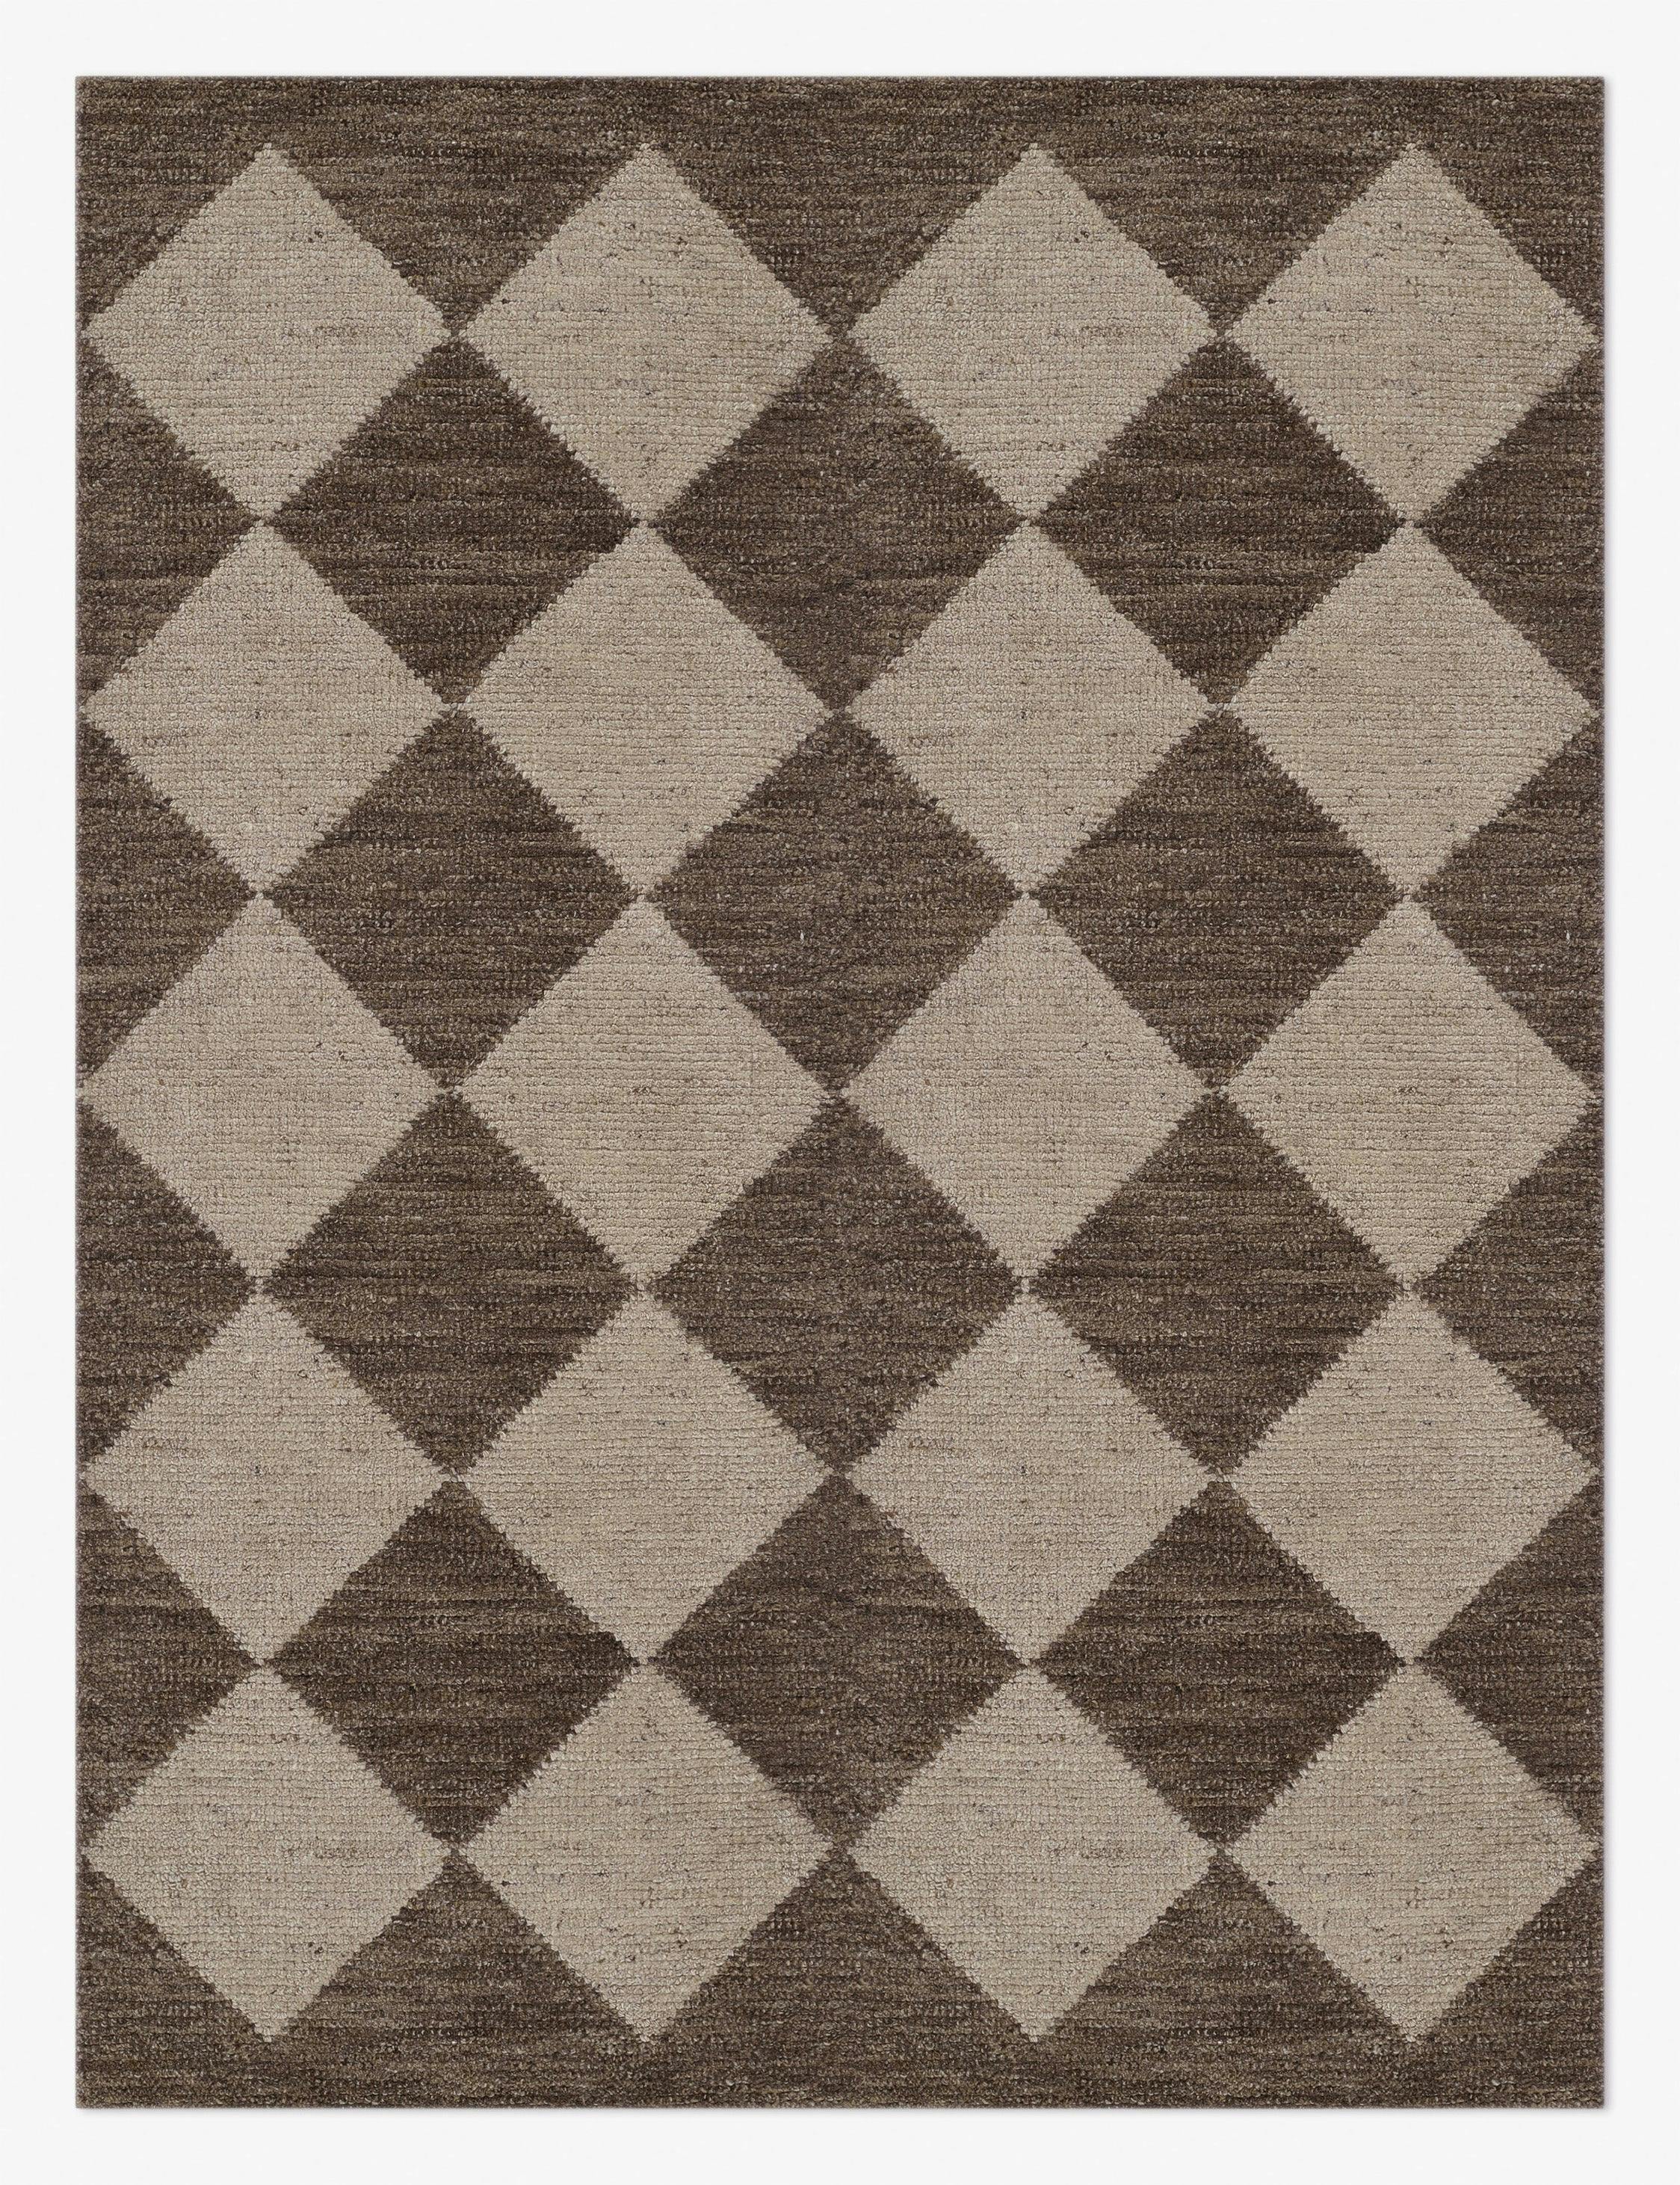 Palau Geometric Brown Hand-Knotted Wool Area Rug - 9' x 12'